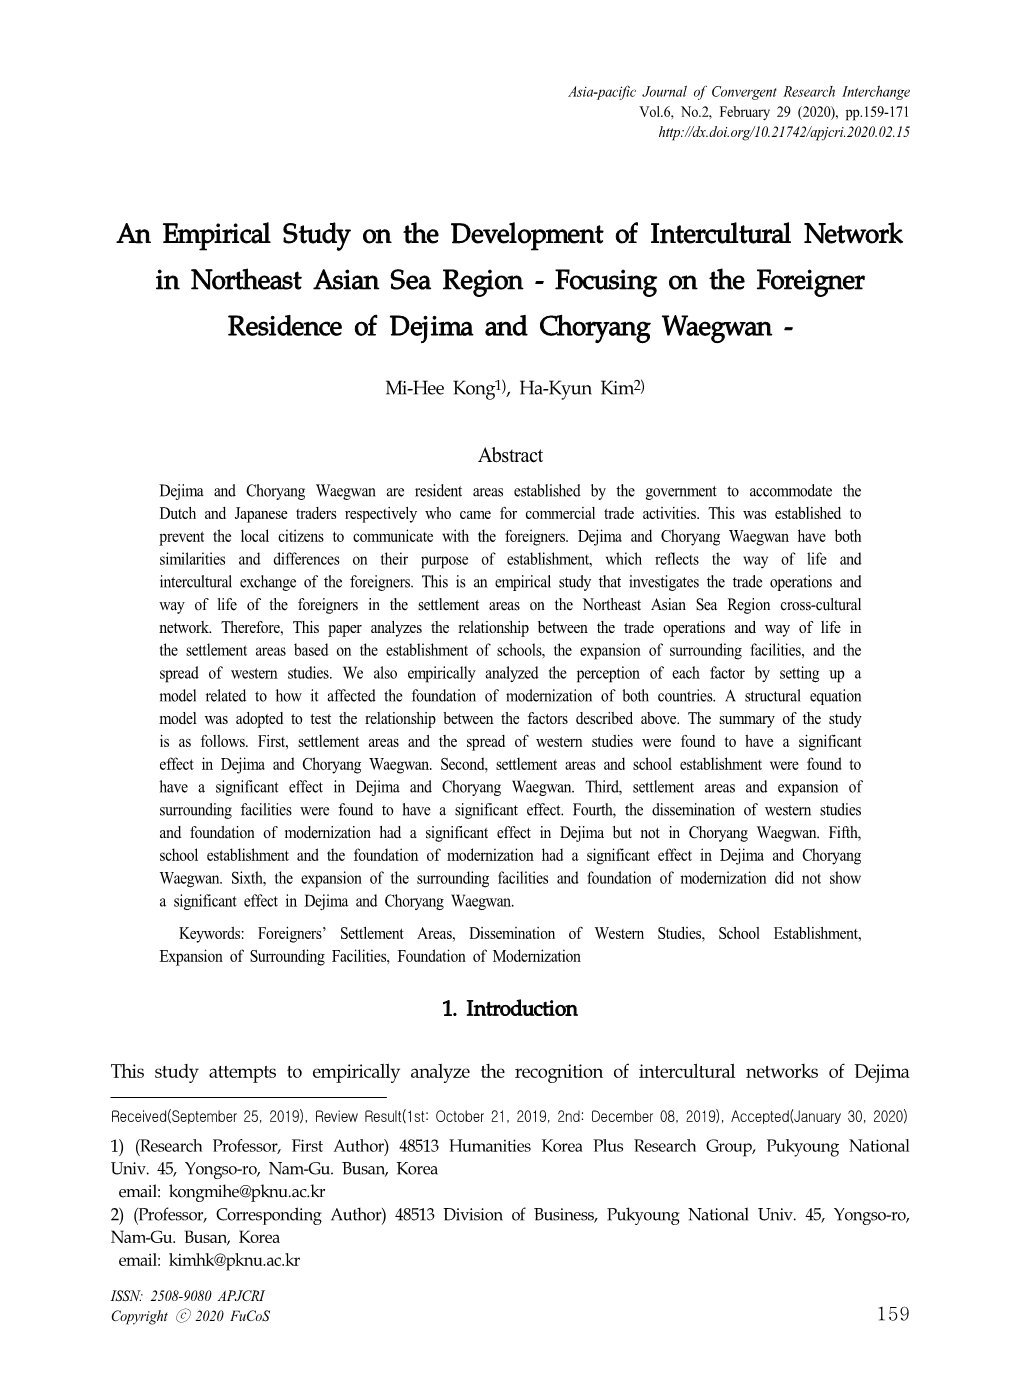 An Empirical Study on the Development of Intercultural Network in Northeast Asian Sea Region - Focusing on the Foreigner Residence of Dejima and Choryang Waegwan